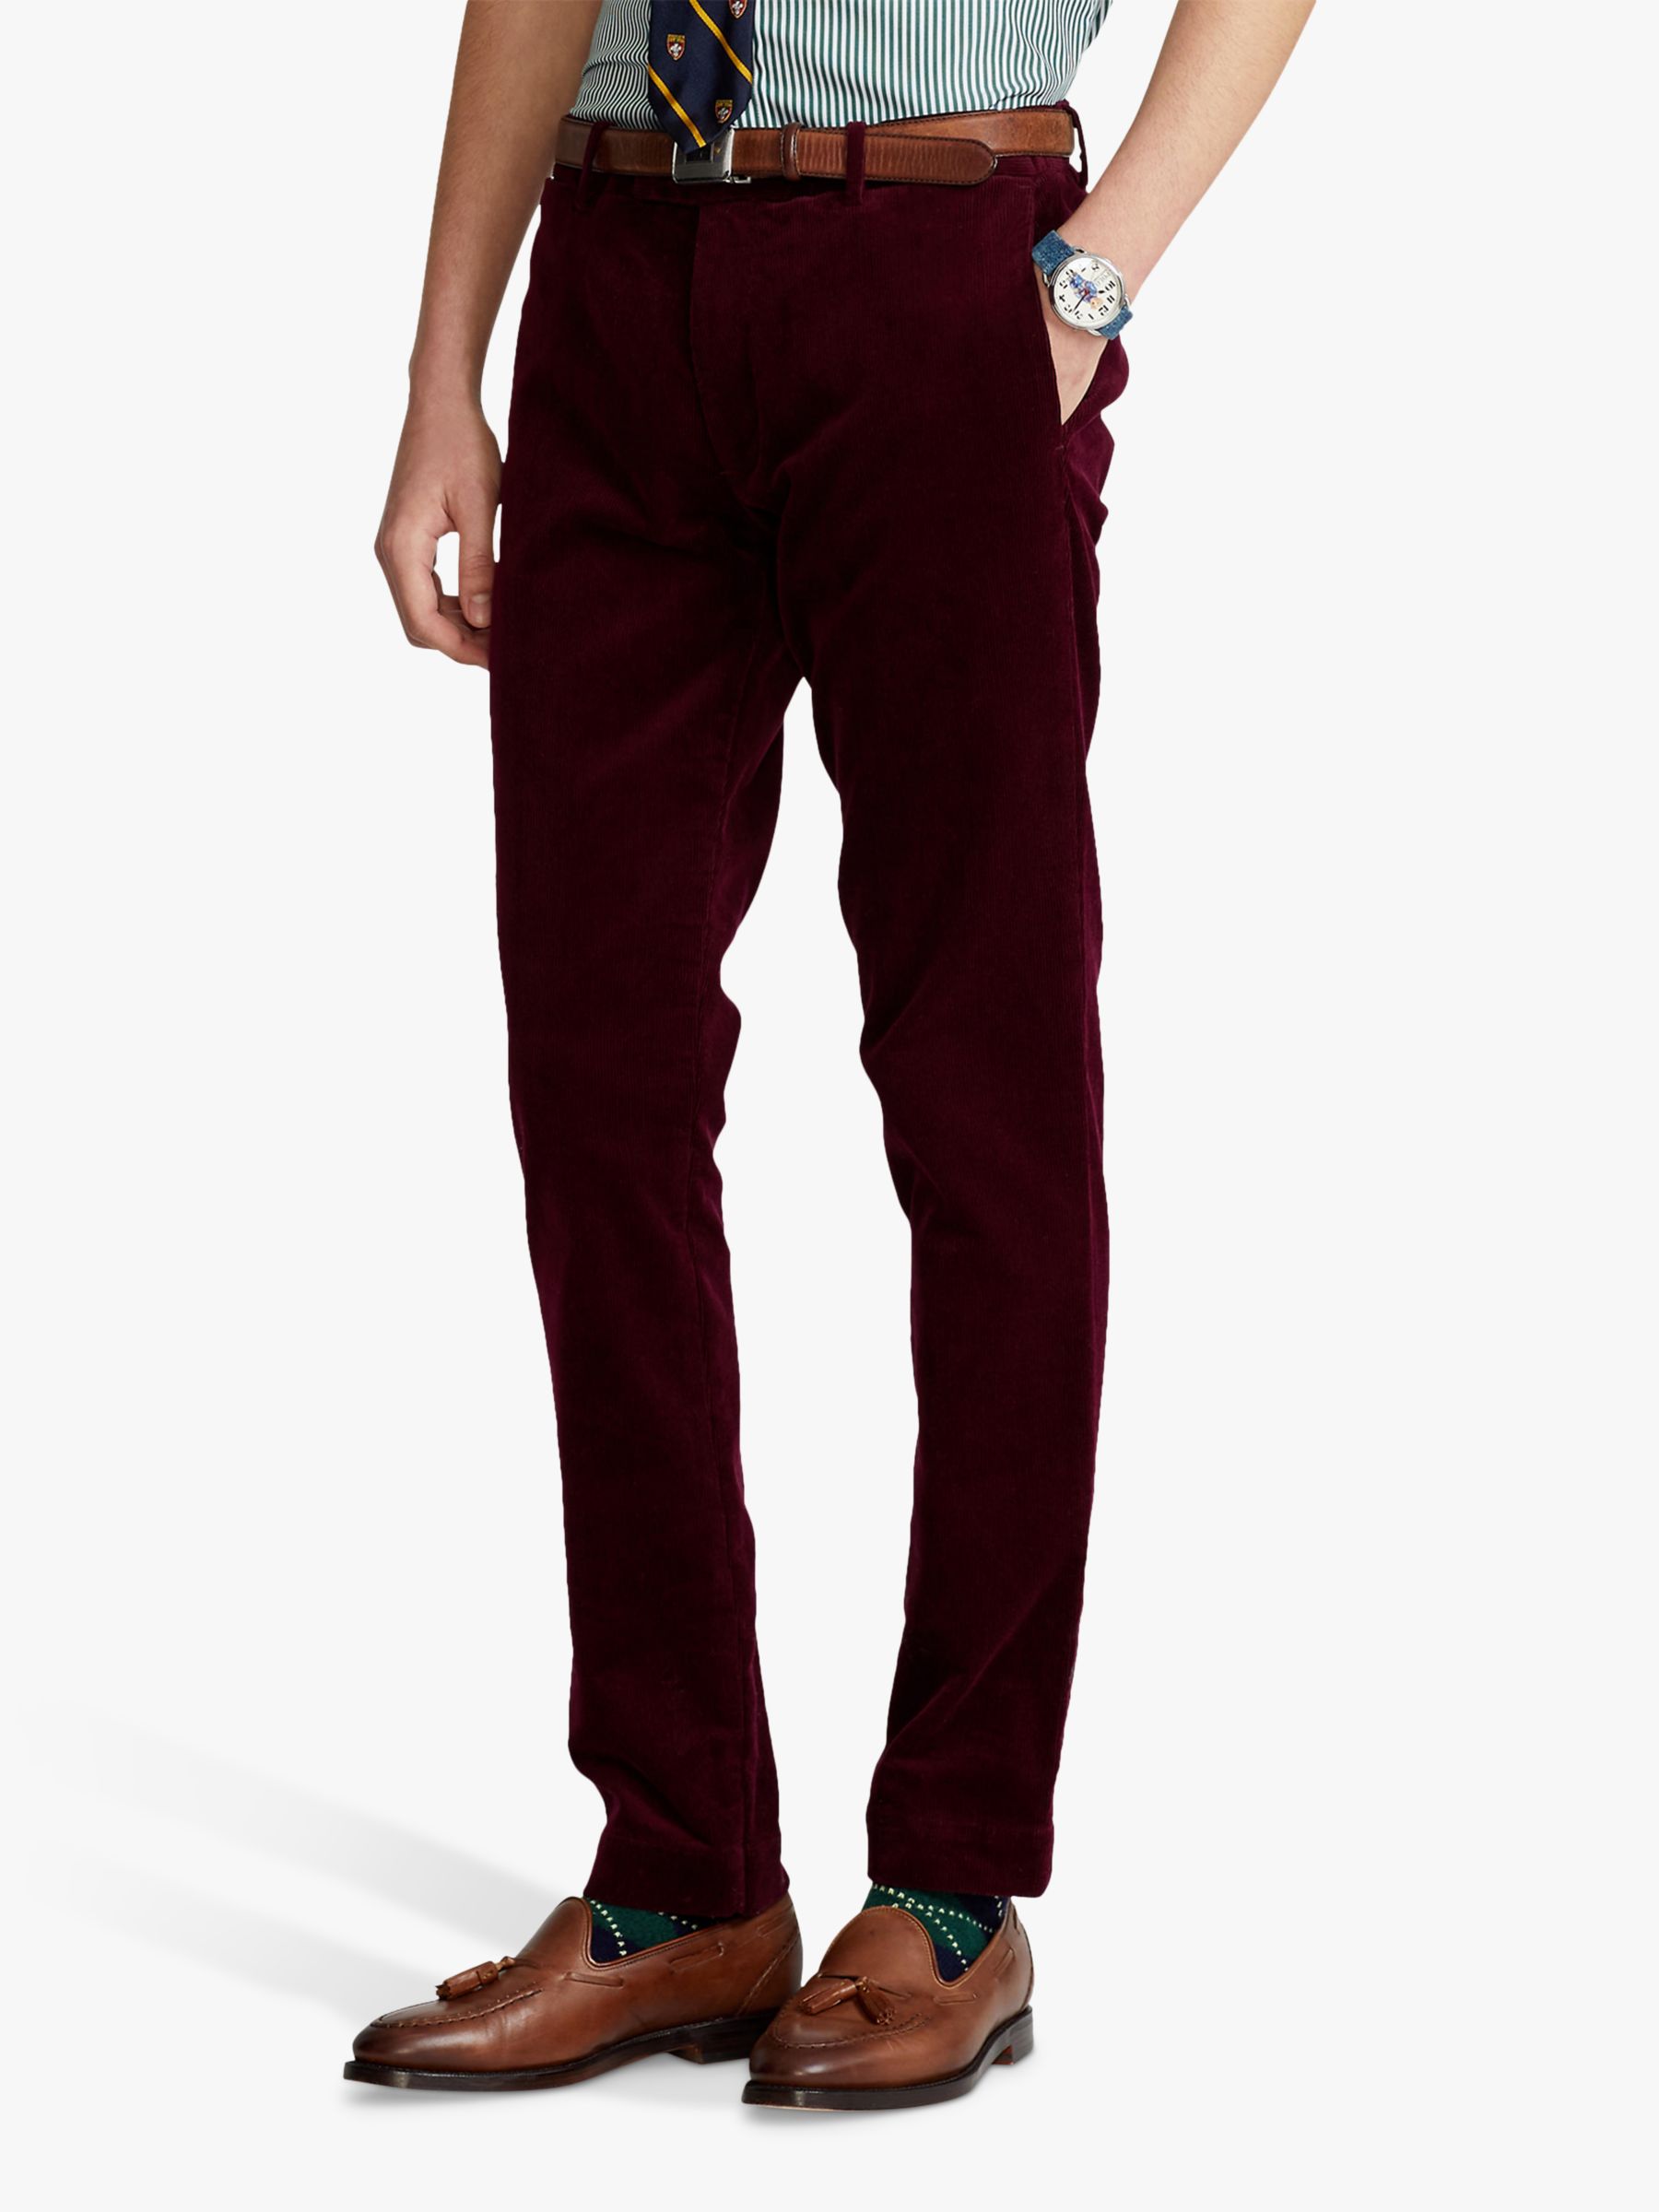 Ralph Lauren Polo Hudson Slim Fit Stretch Cotton Trousers Italian Red 34R male 97% cotton, 3% elastane